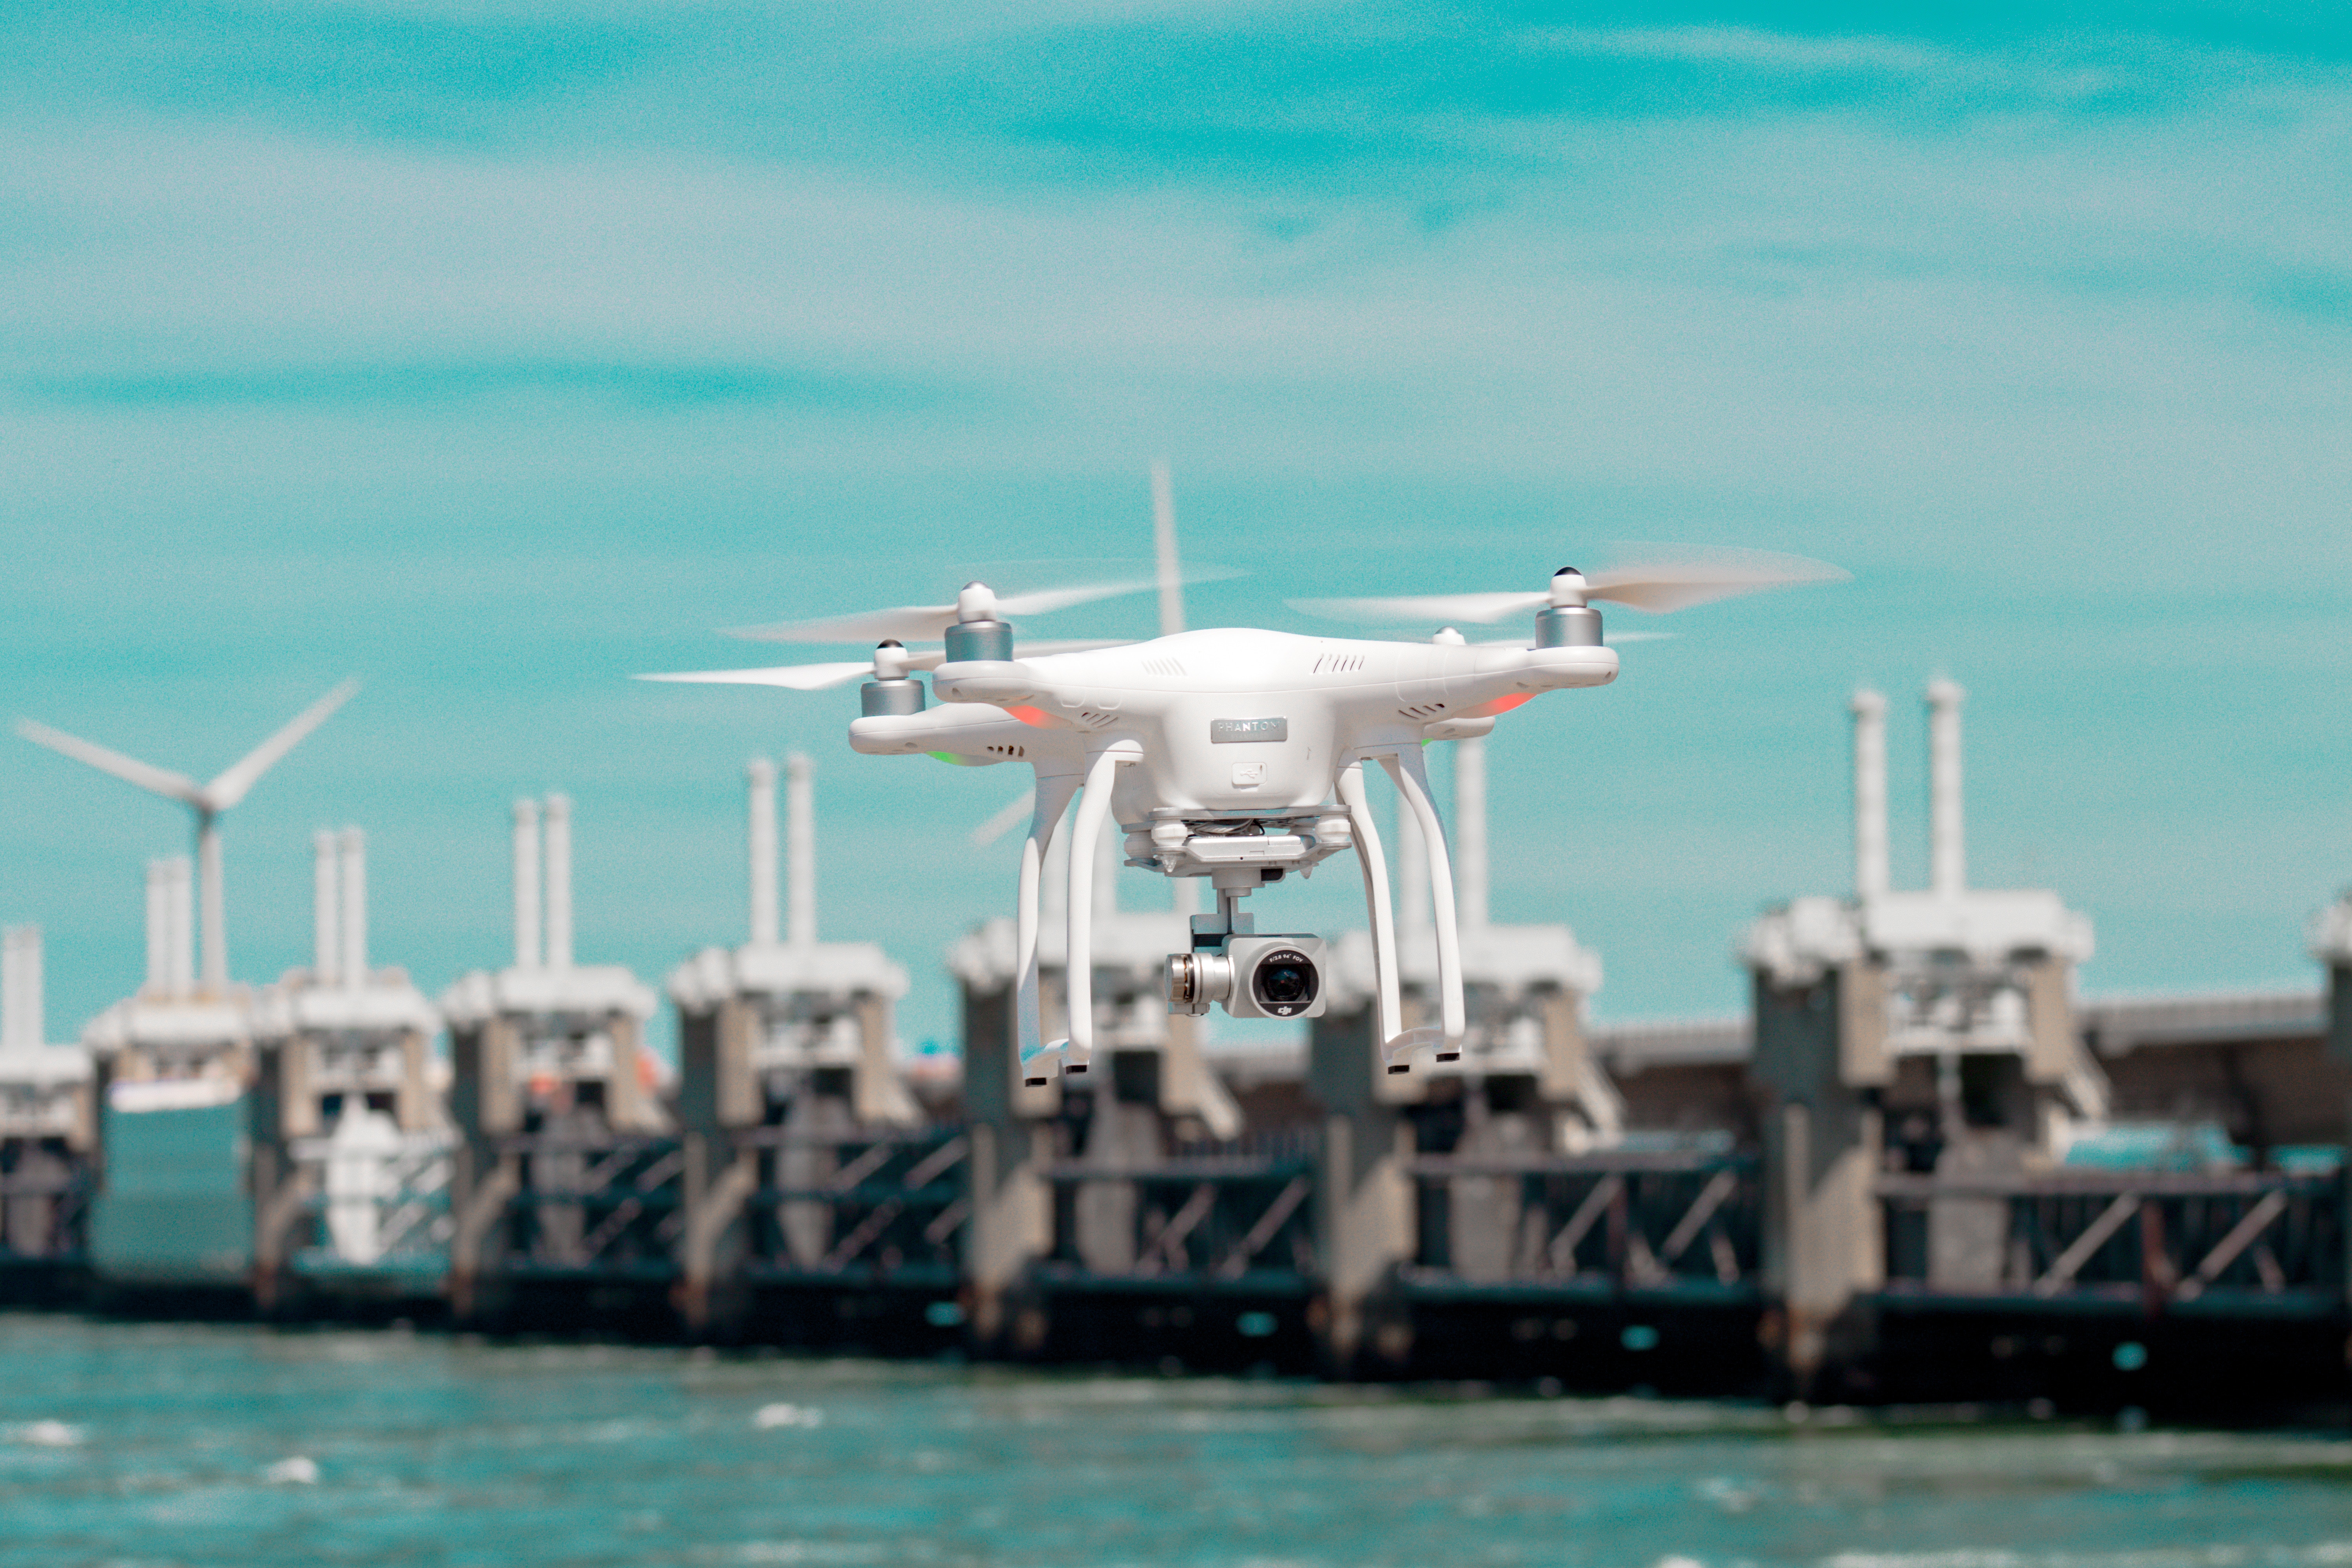 NL/DE Partnership brings drone innovation 